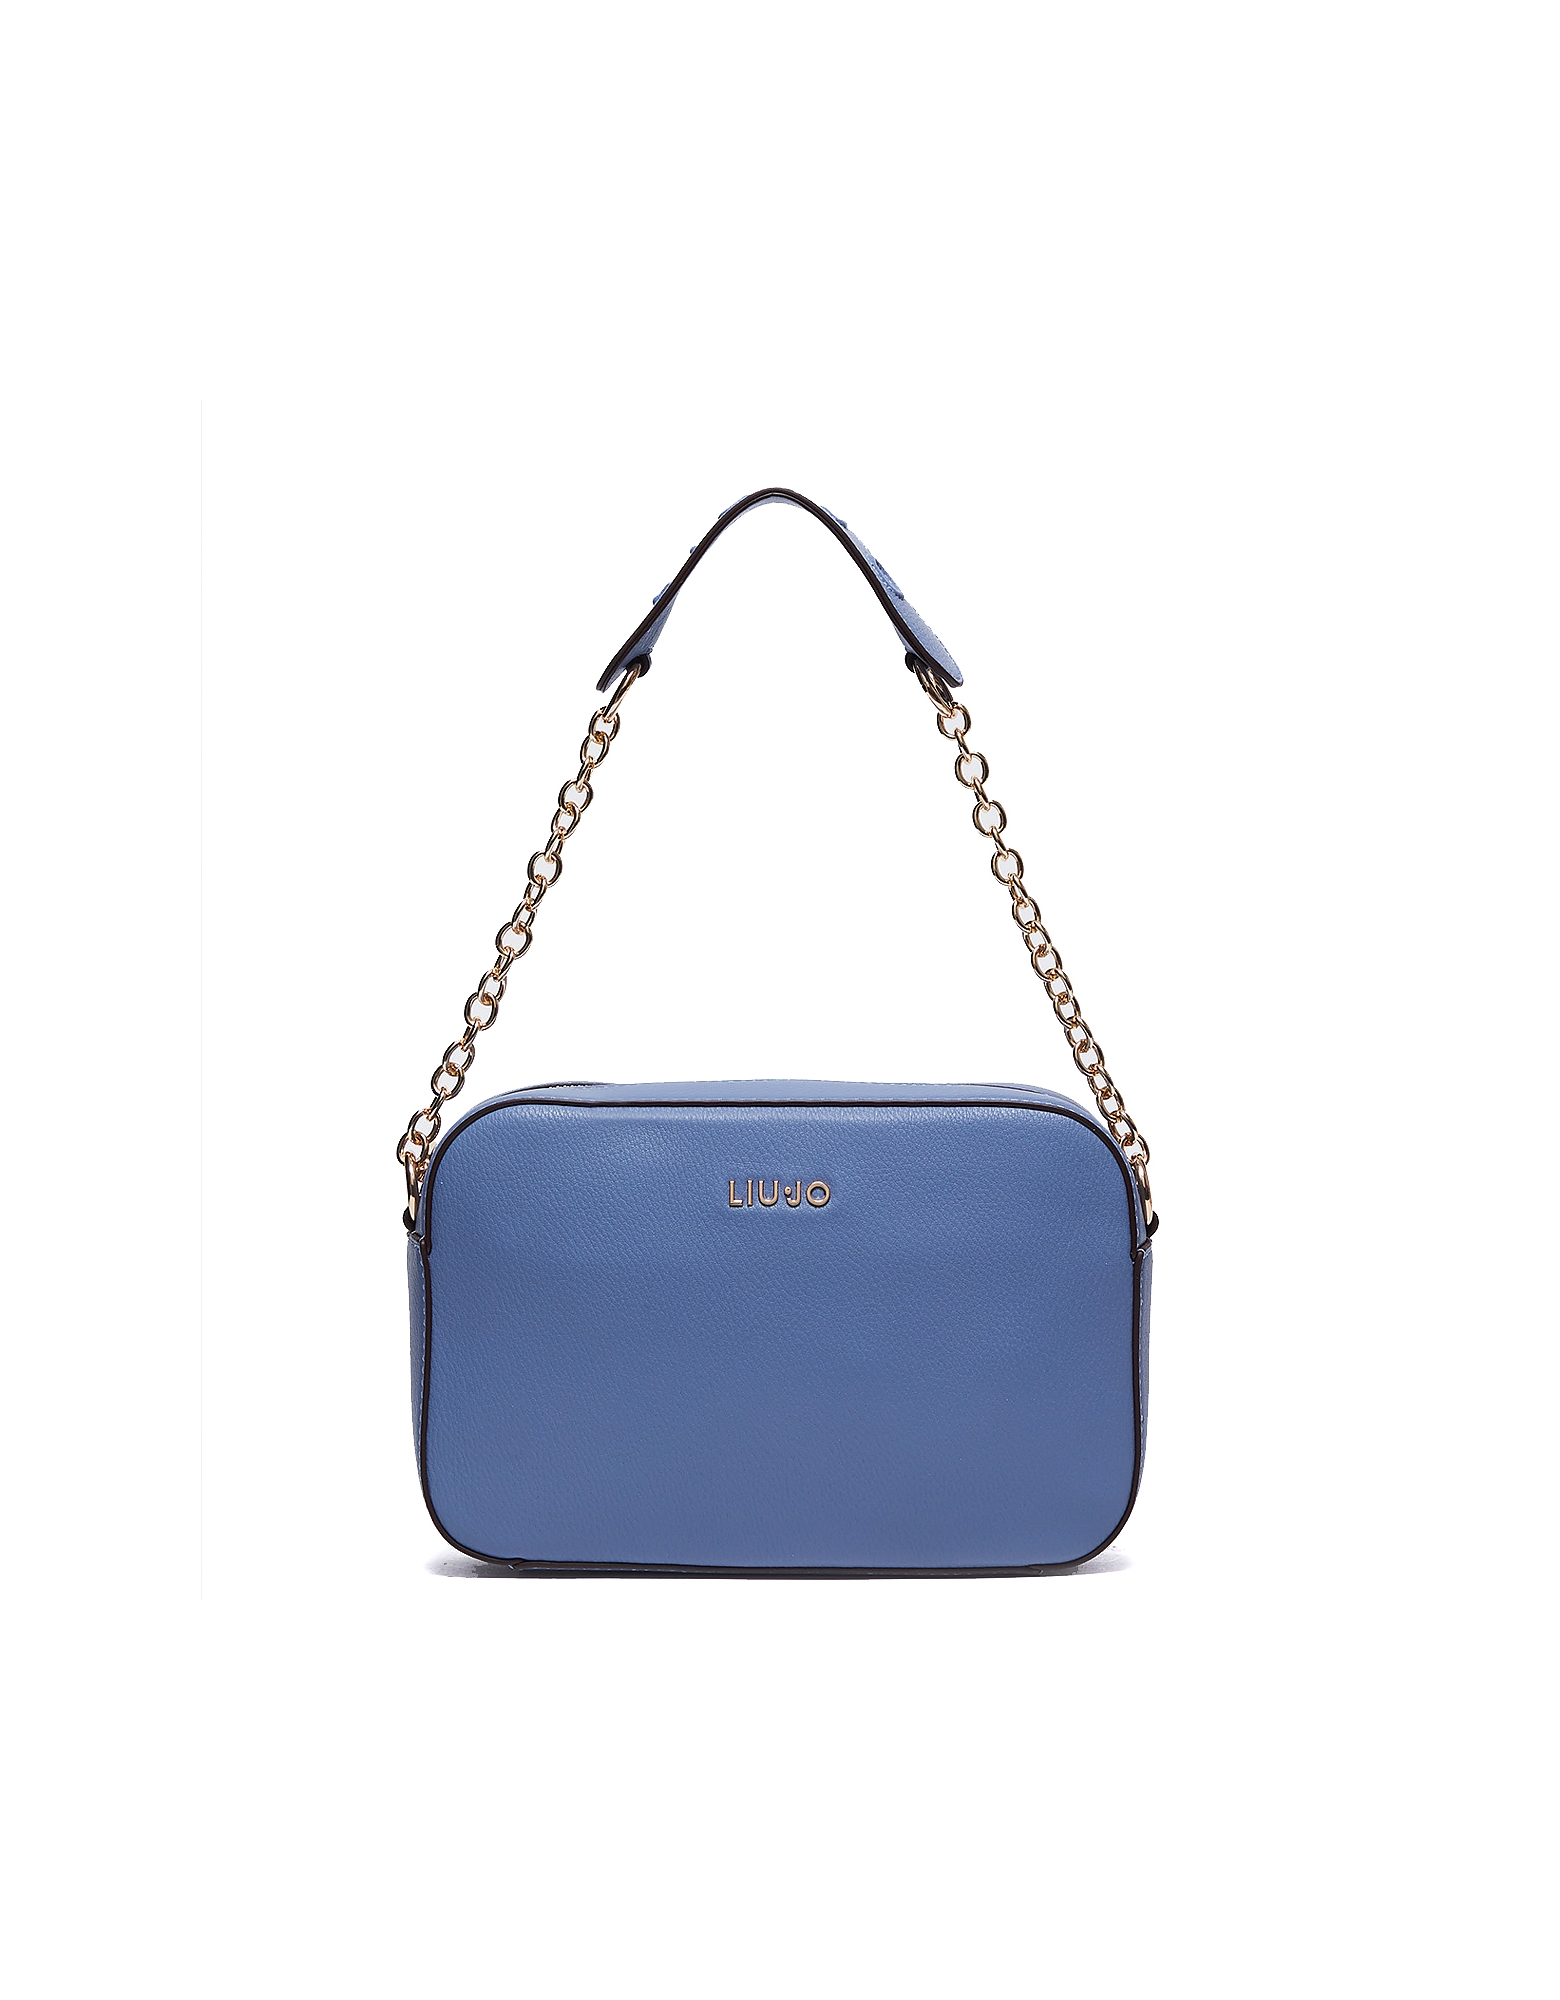 Liu •jo Designer Handbags Women's Blue Bag